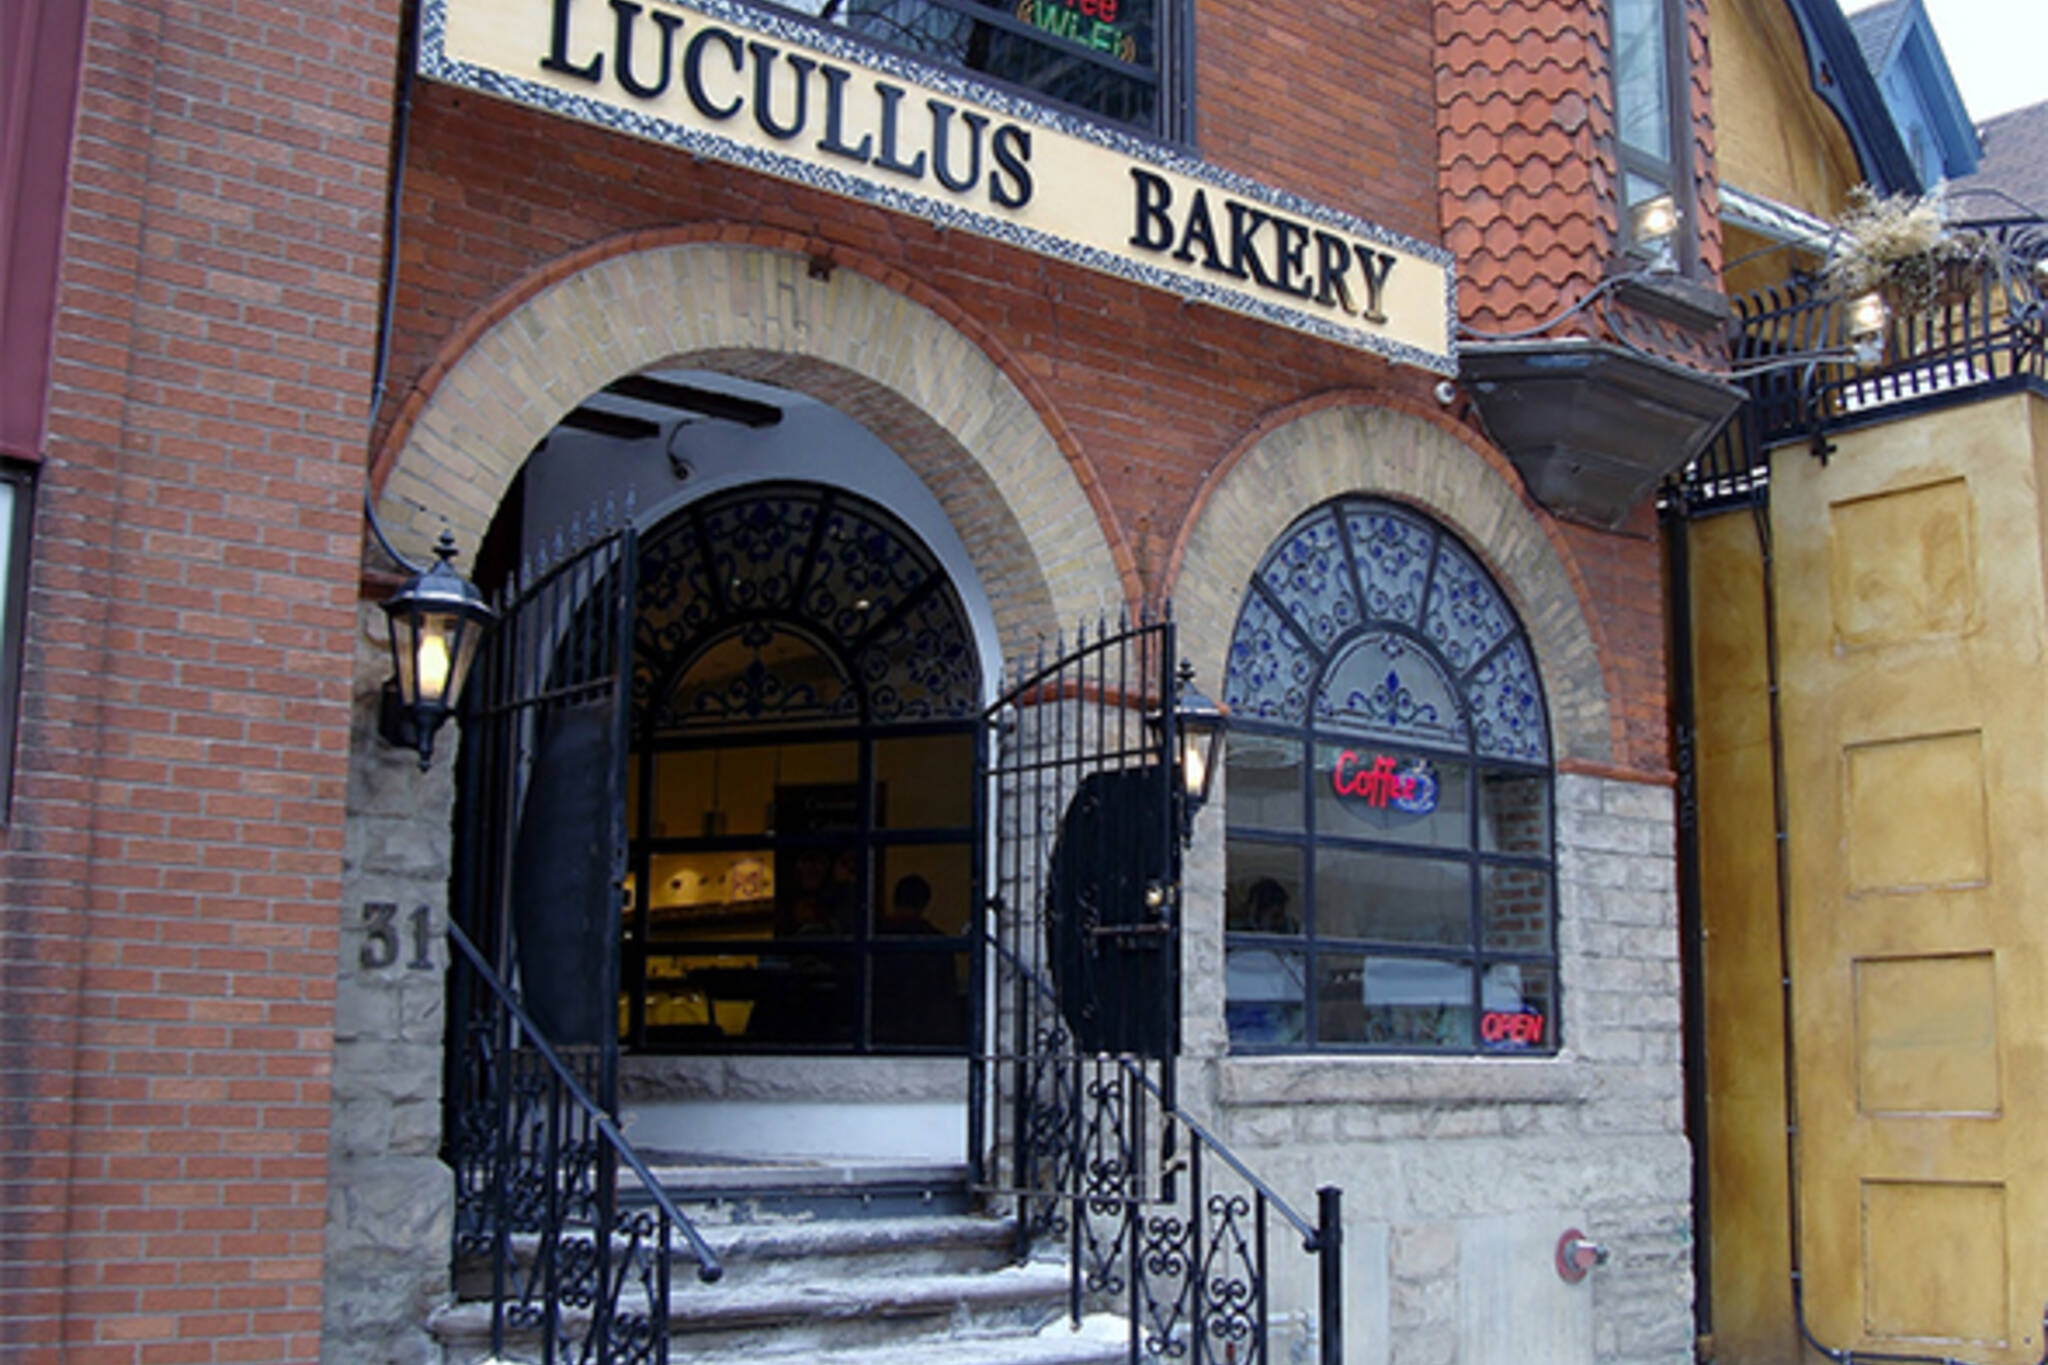 Lucullus bakery toronto